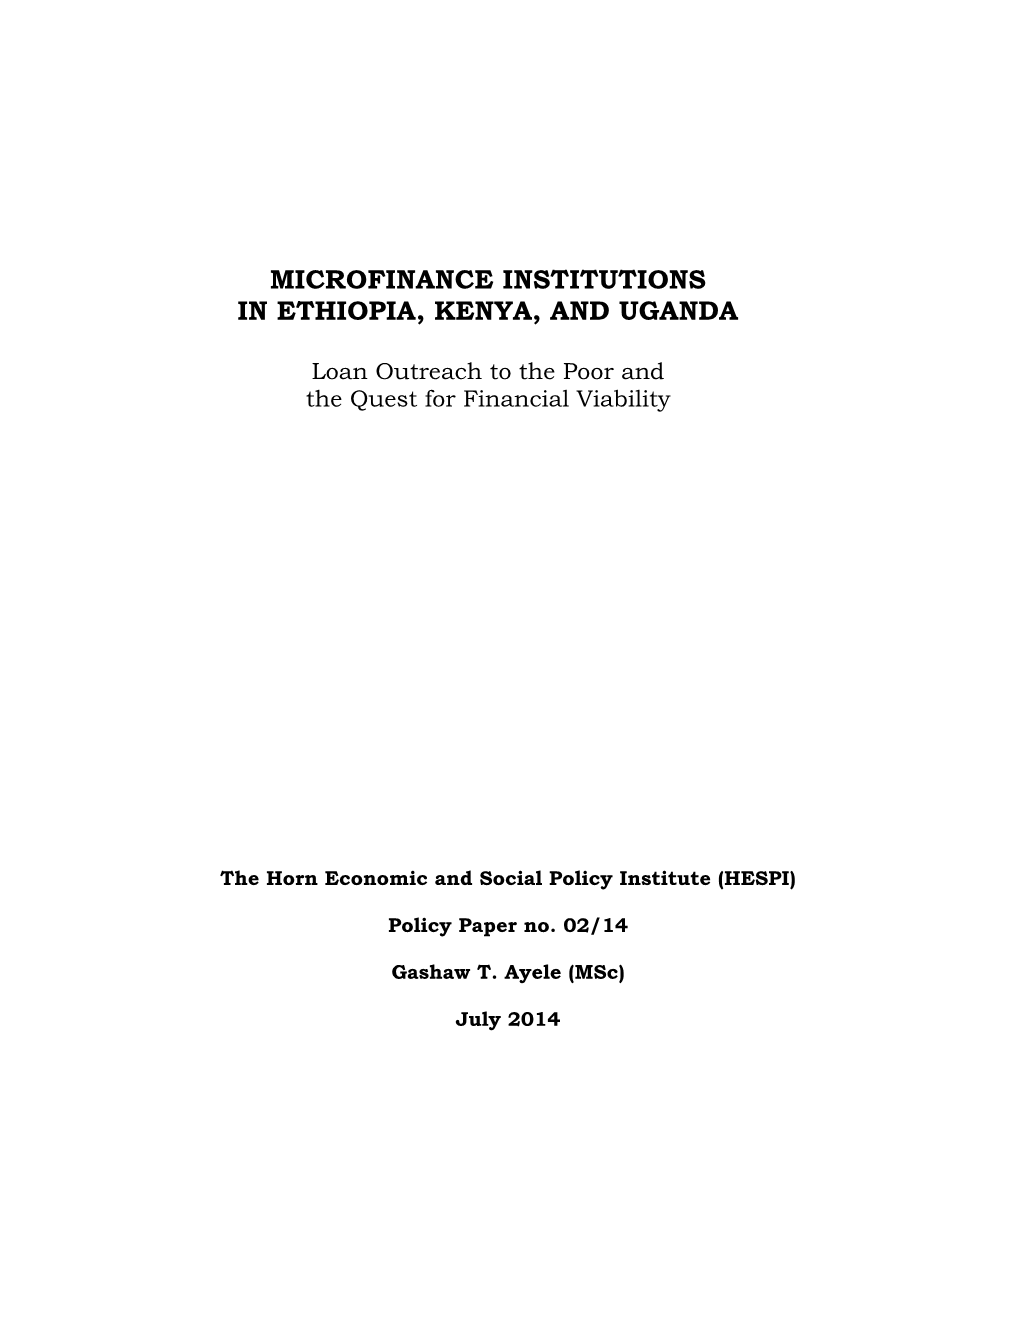 Microfinance Institutions in Ethiopia, Kenya, and Uganda